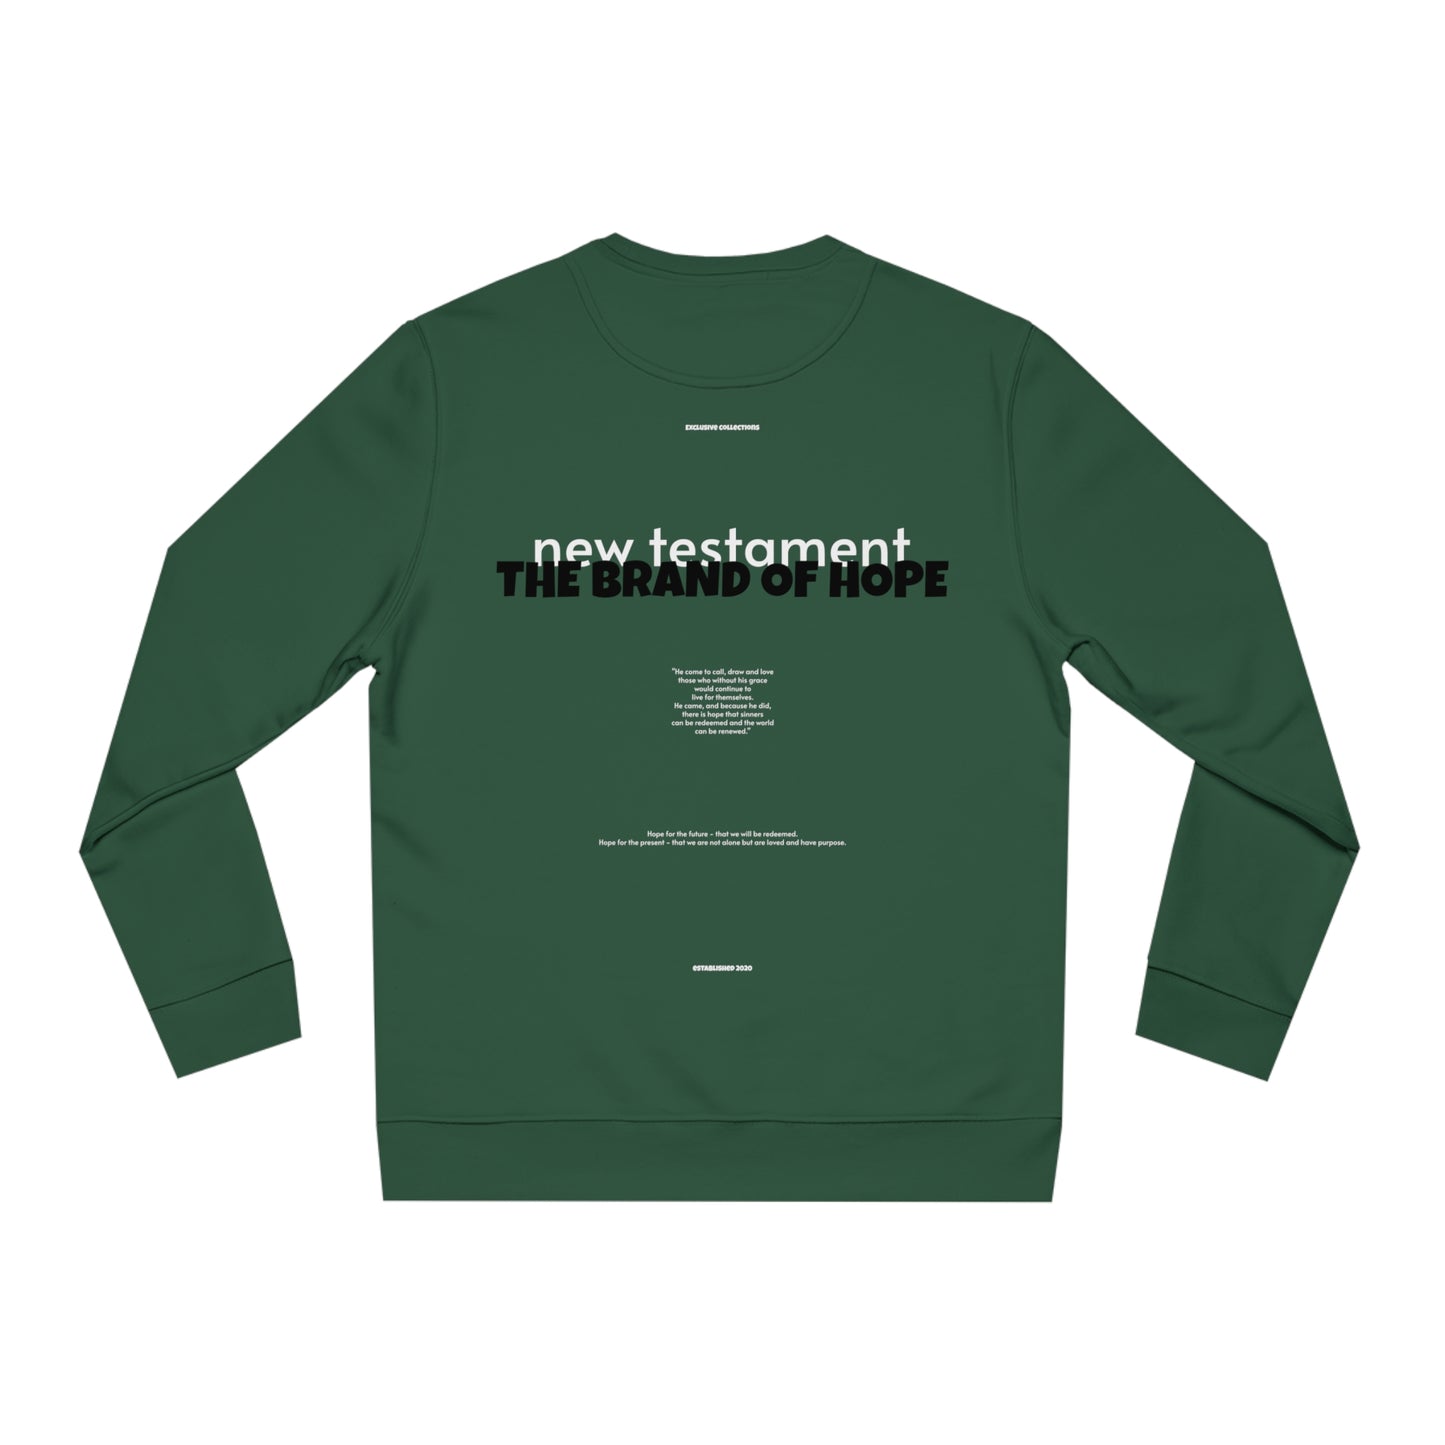 Sweatshirt Brand of Hope